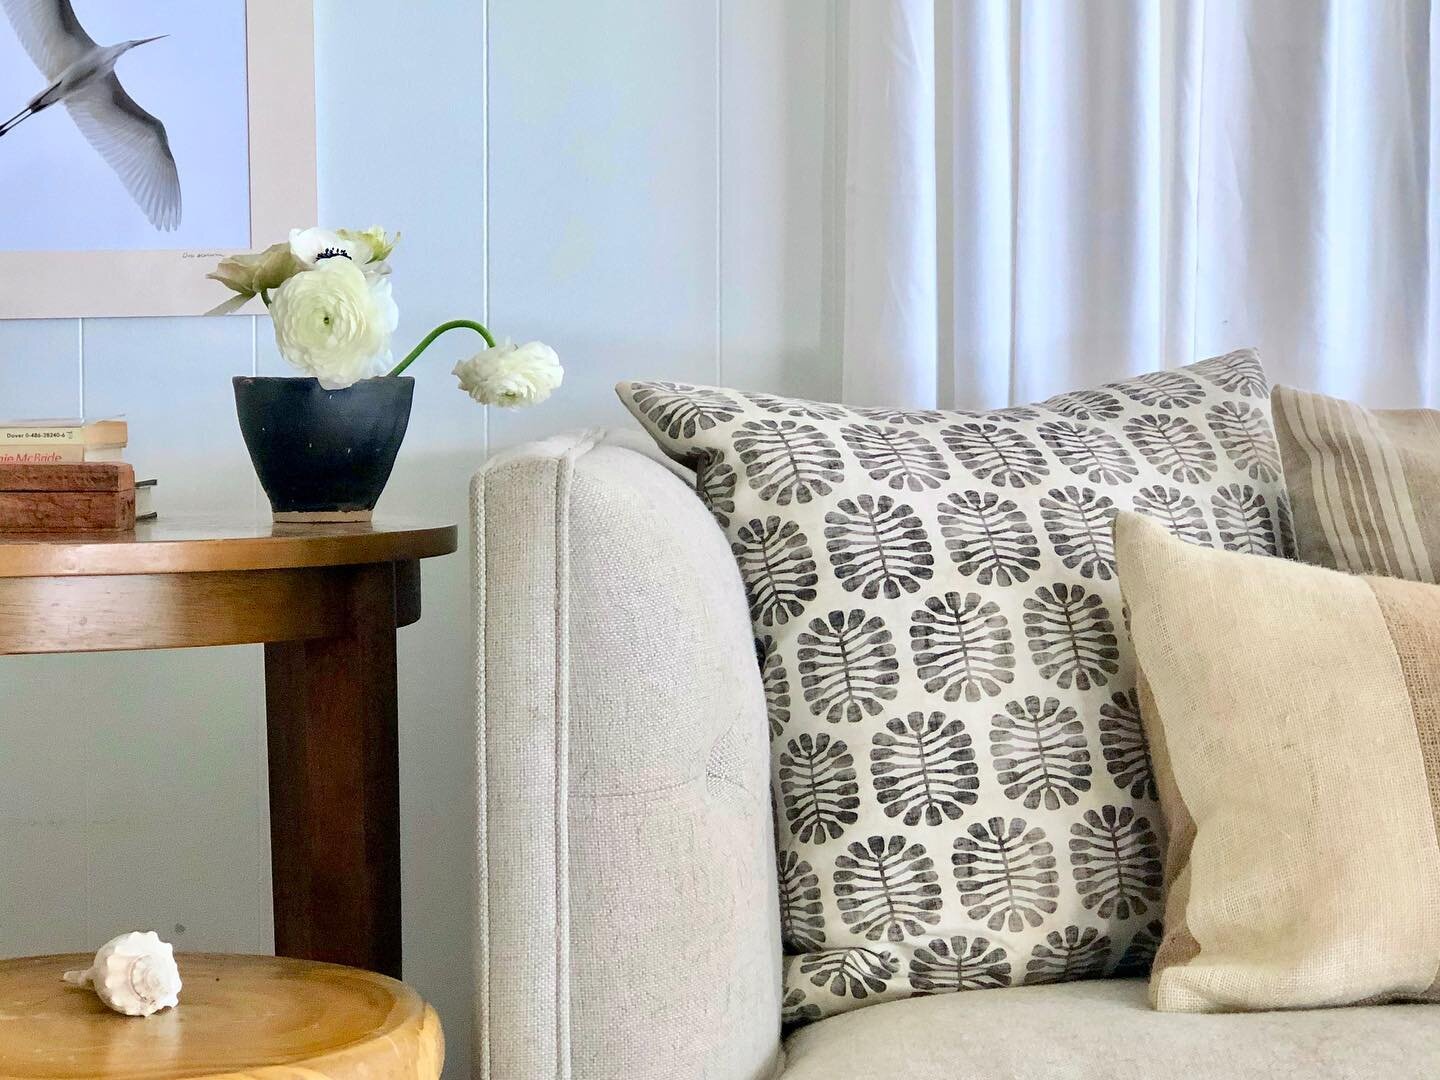 Cozy corner - 🤍 this pillow print!